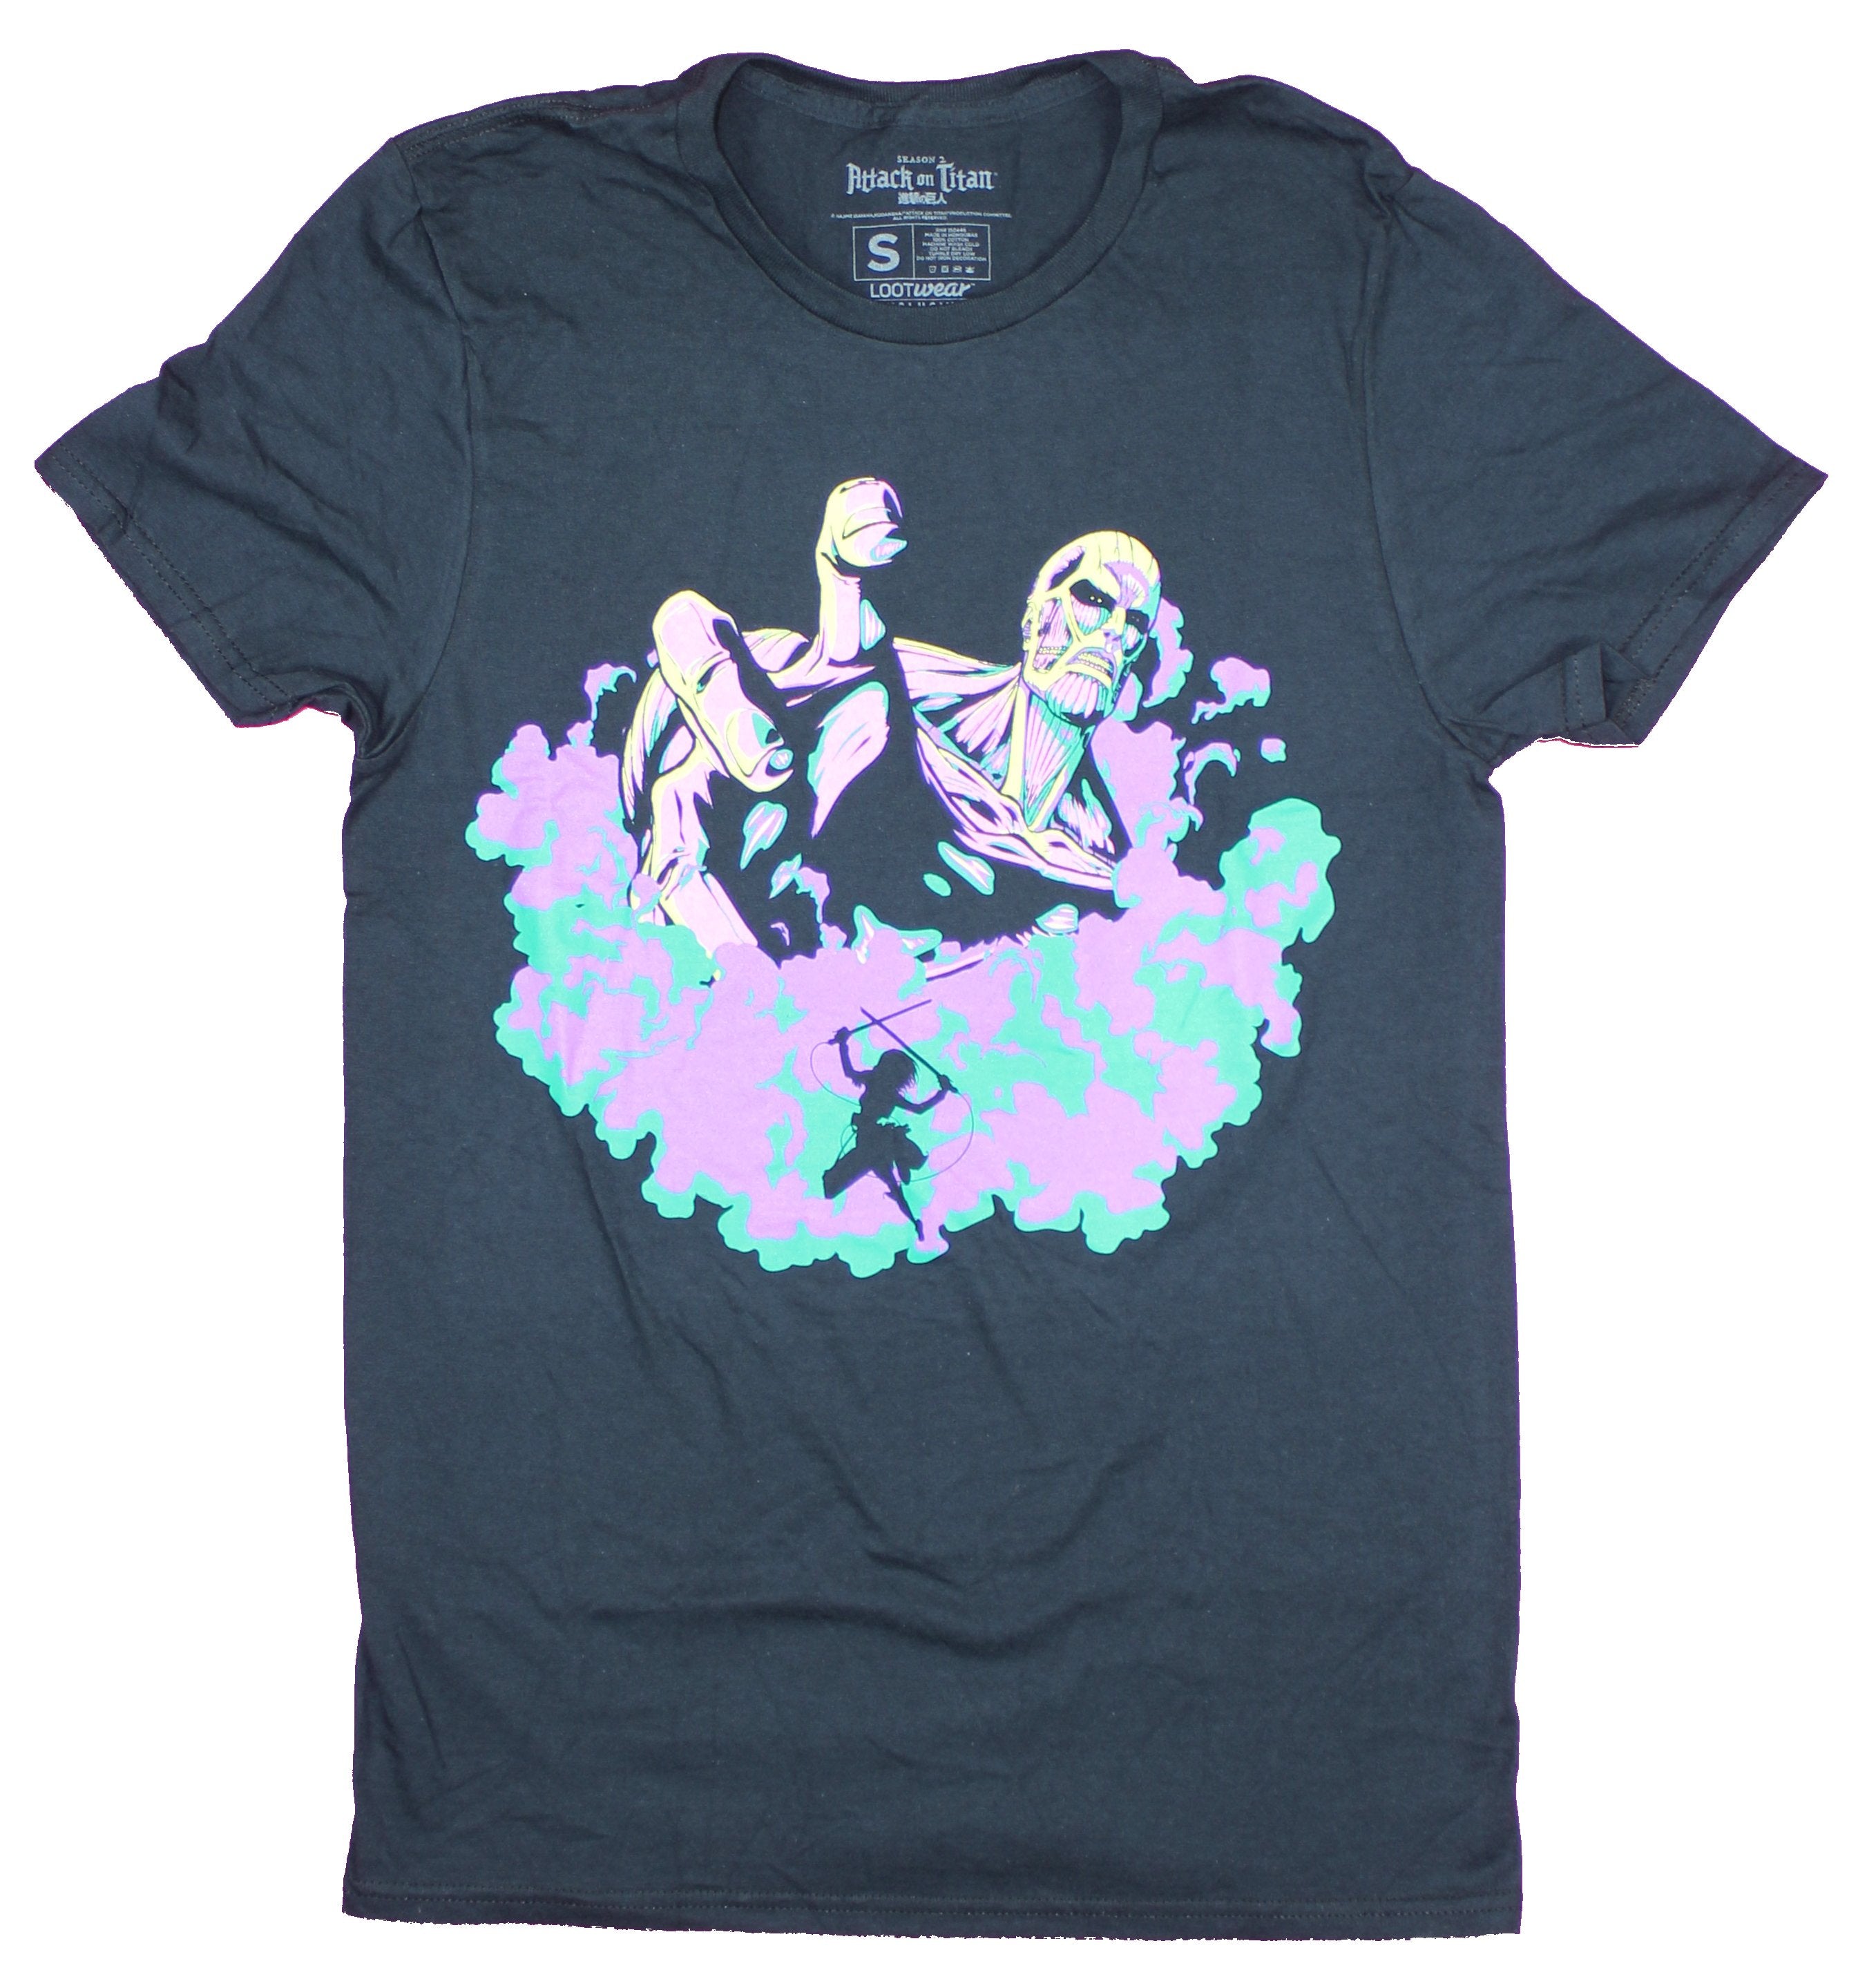 Attack on Titan Mens T-Shirt- Reaching Neon Styled Titan Image